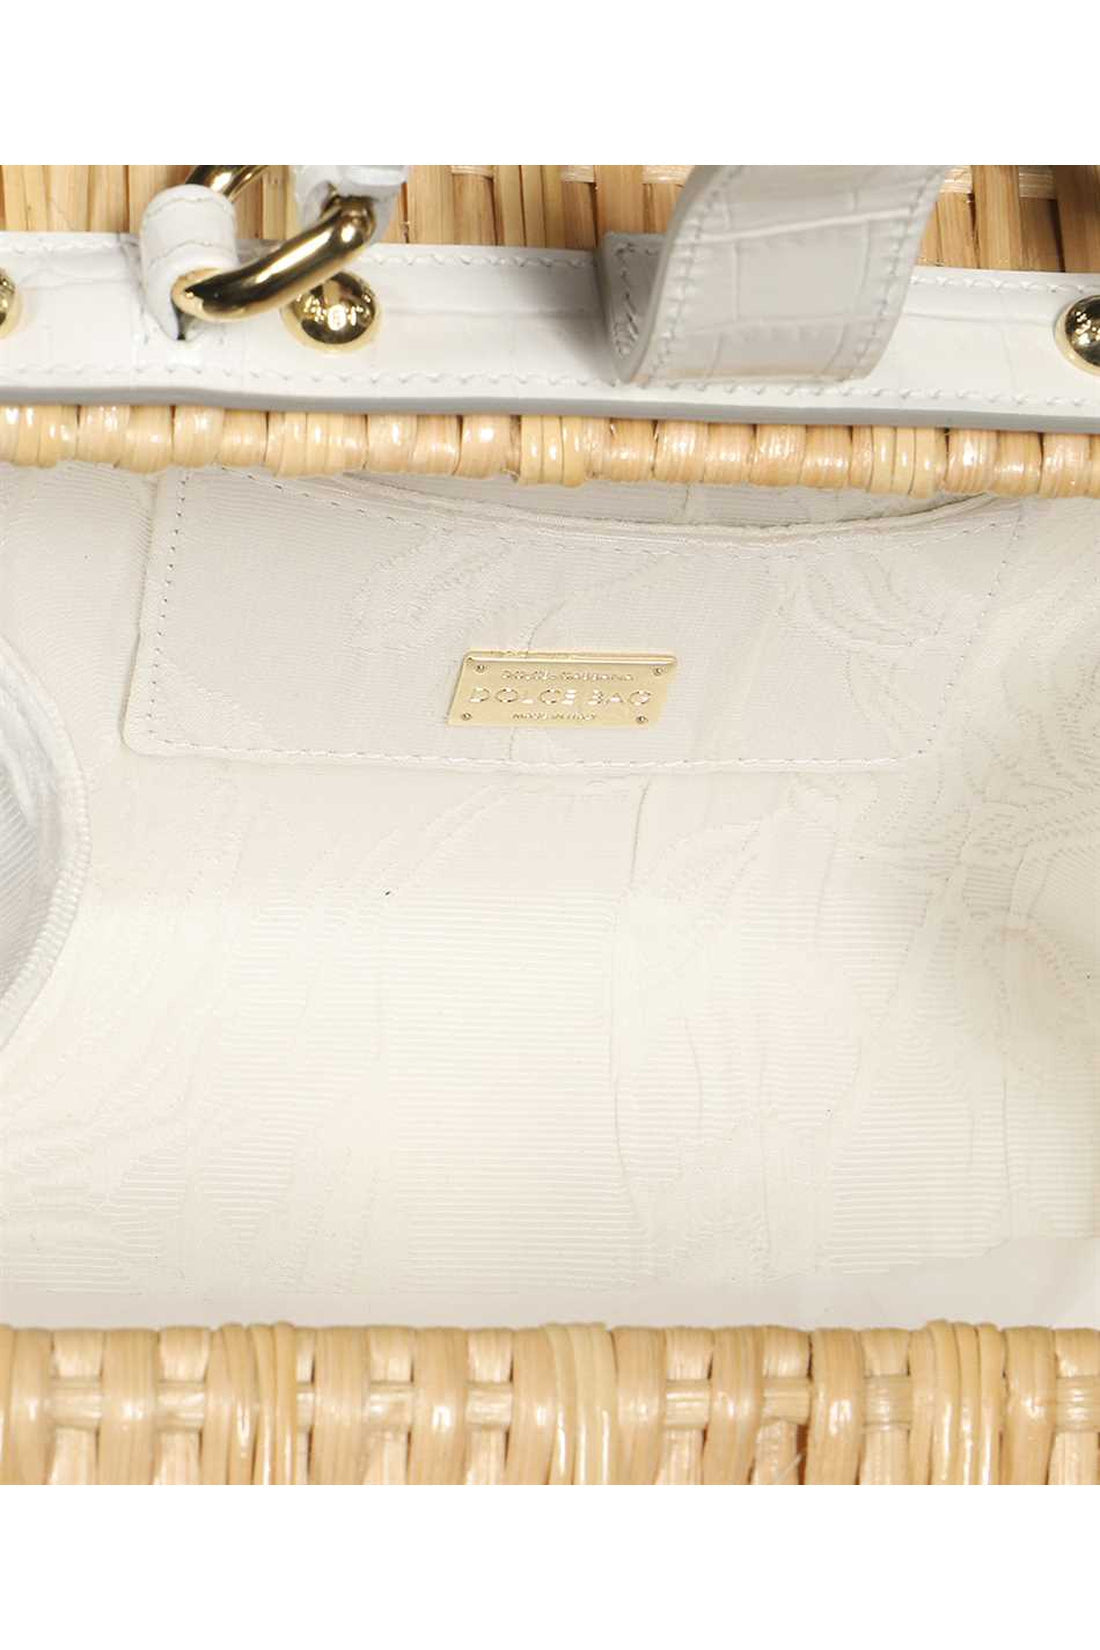 Dolce & Gabbana-OUTLET-SALE-Dolce Box handbag-ARCHIVIST